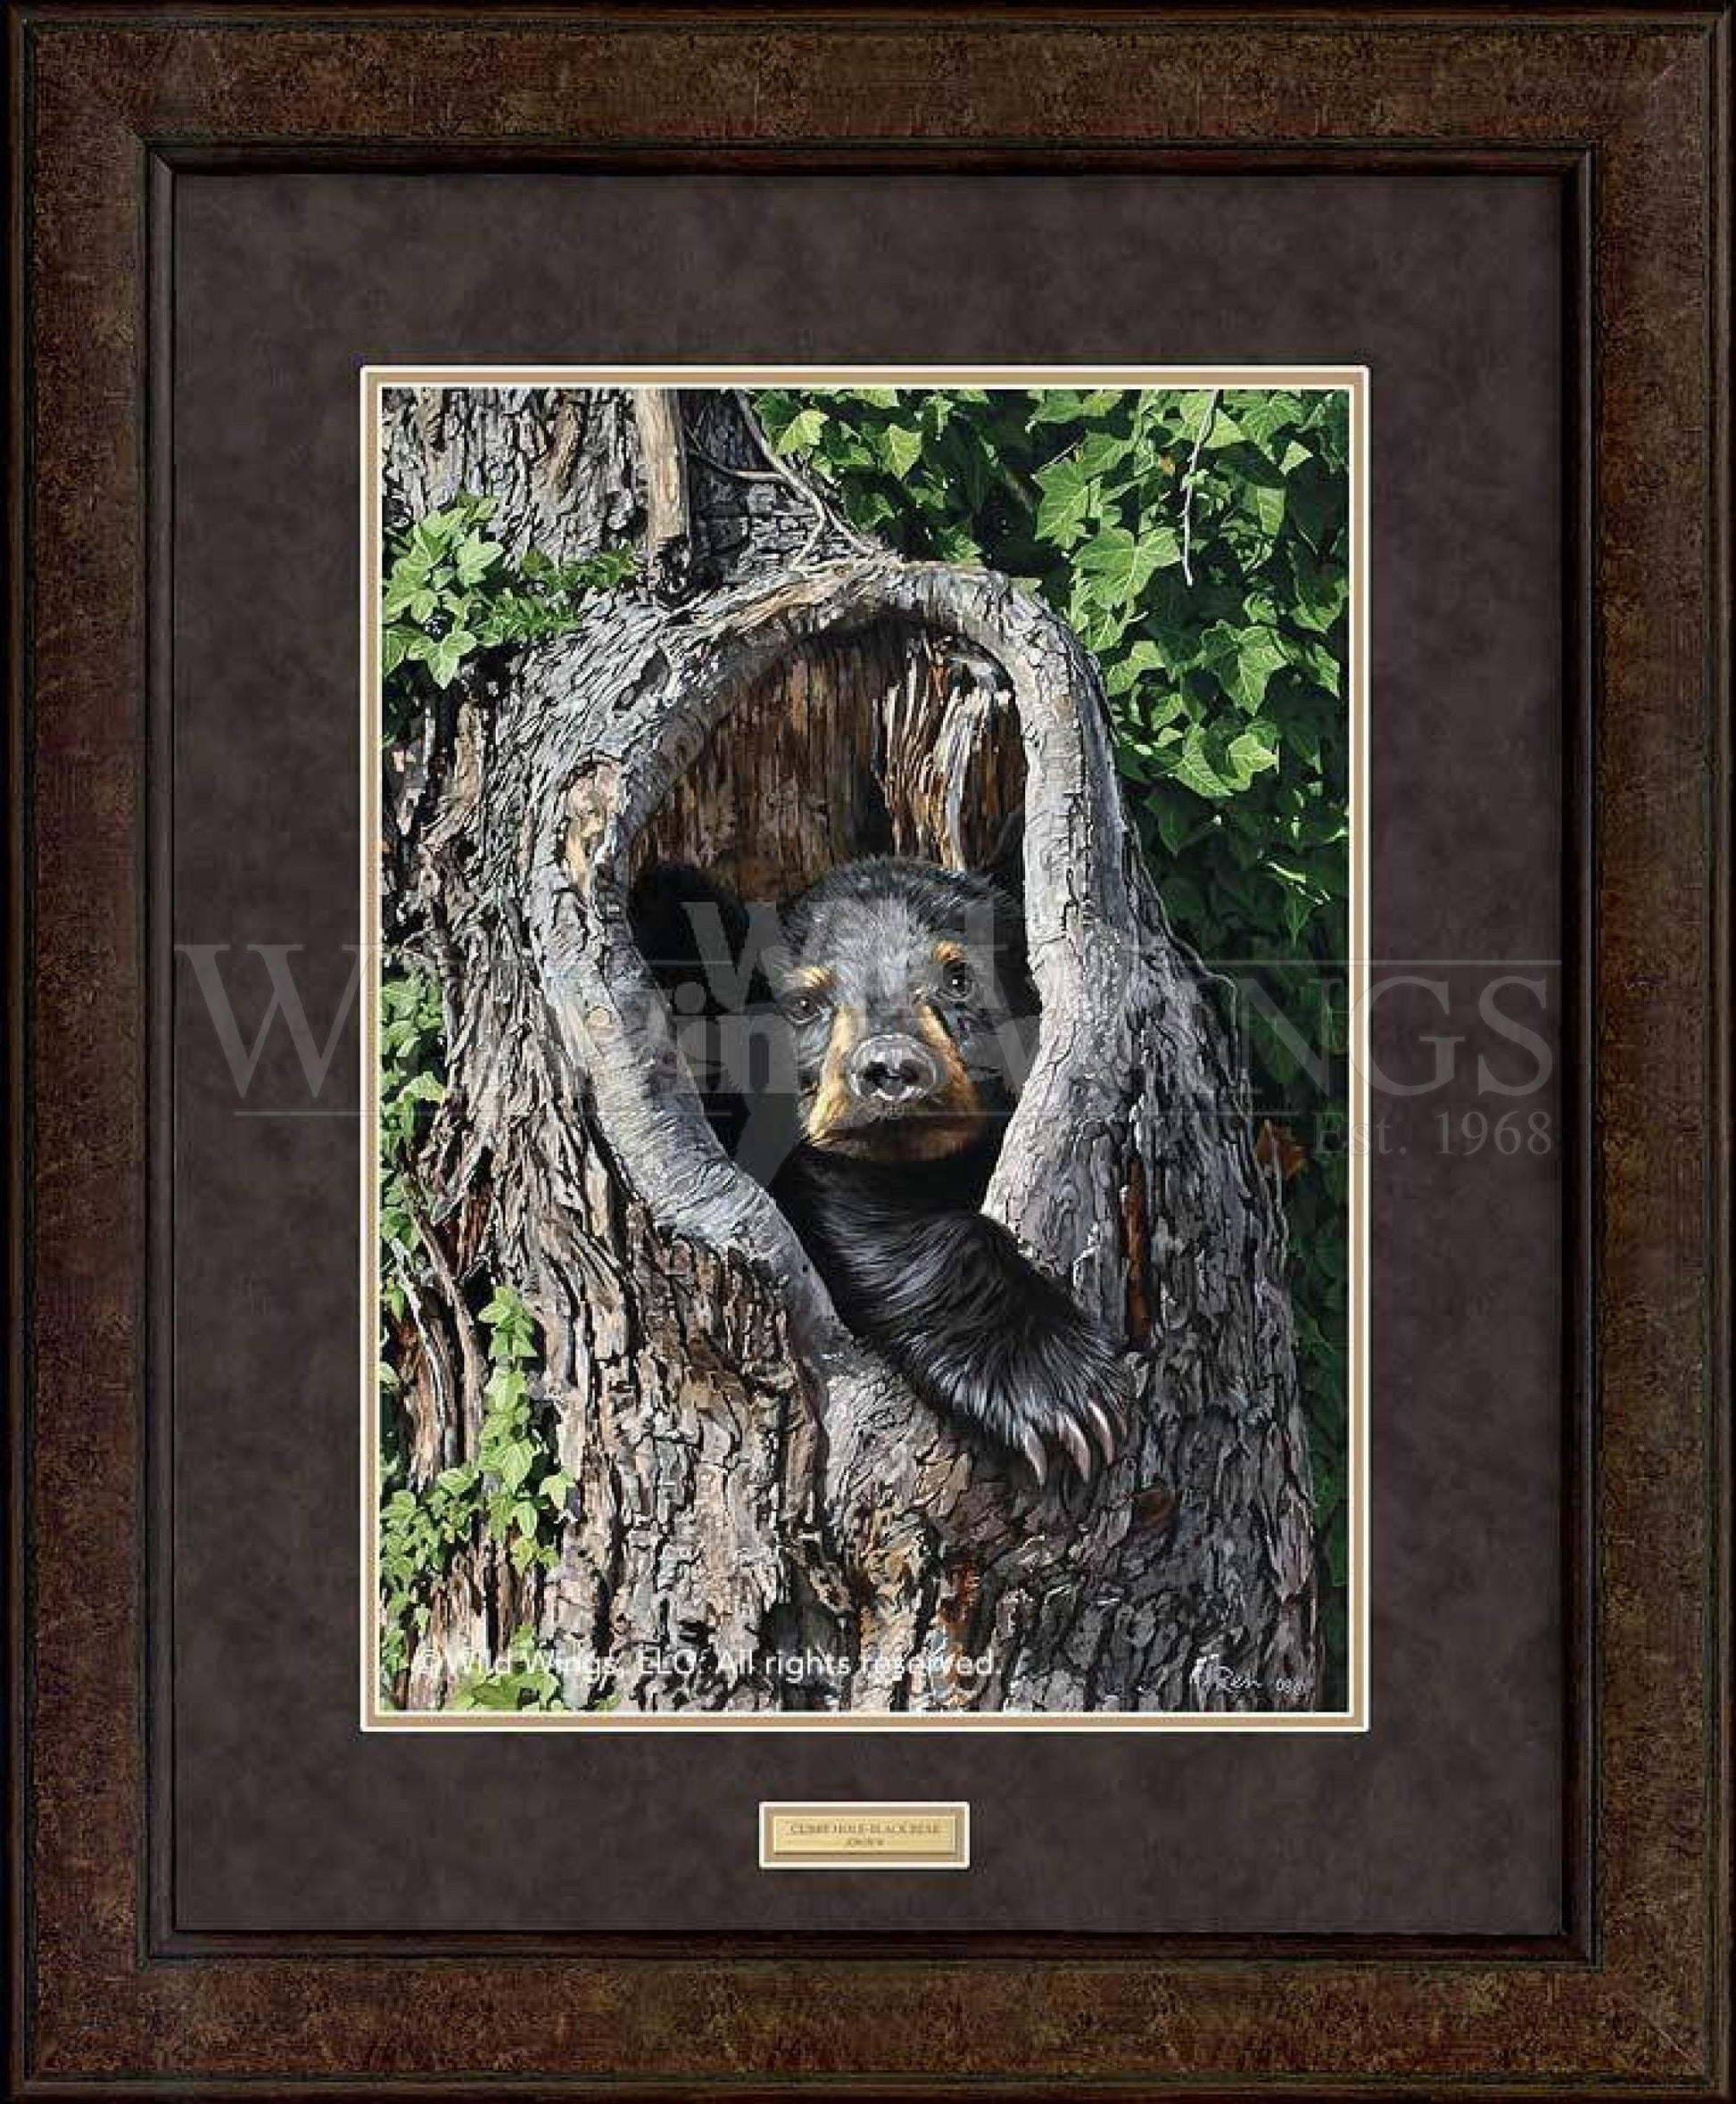 cubby-holemdashblack-bear-gna-premium-framed-print35h-x-29w-art-collection_420.jpg